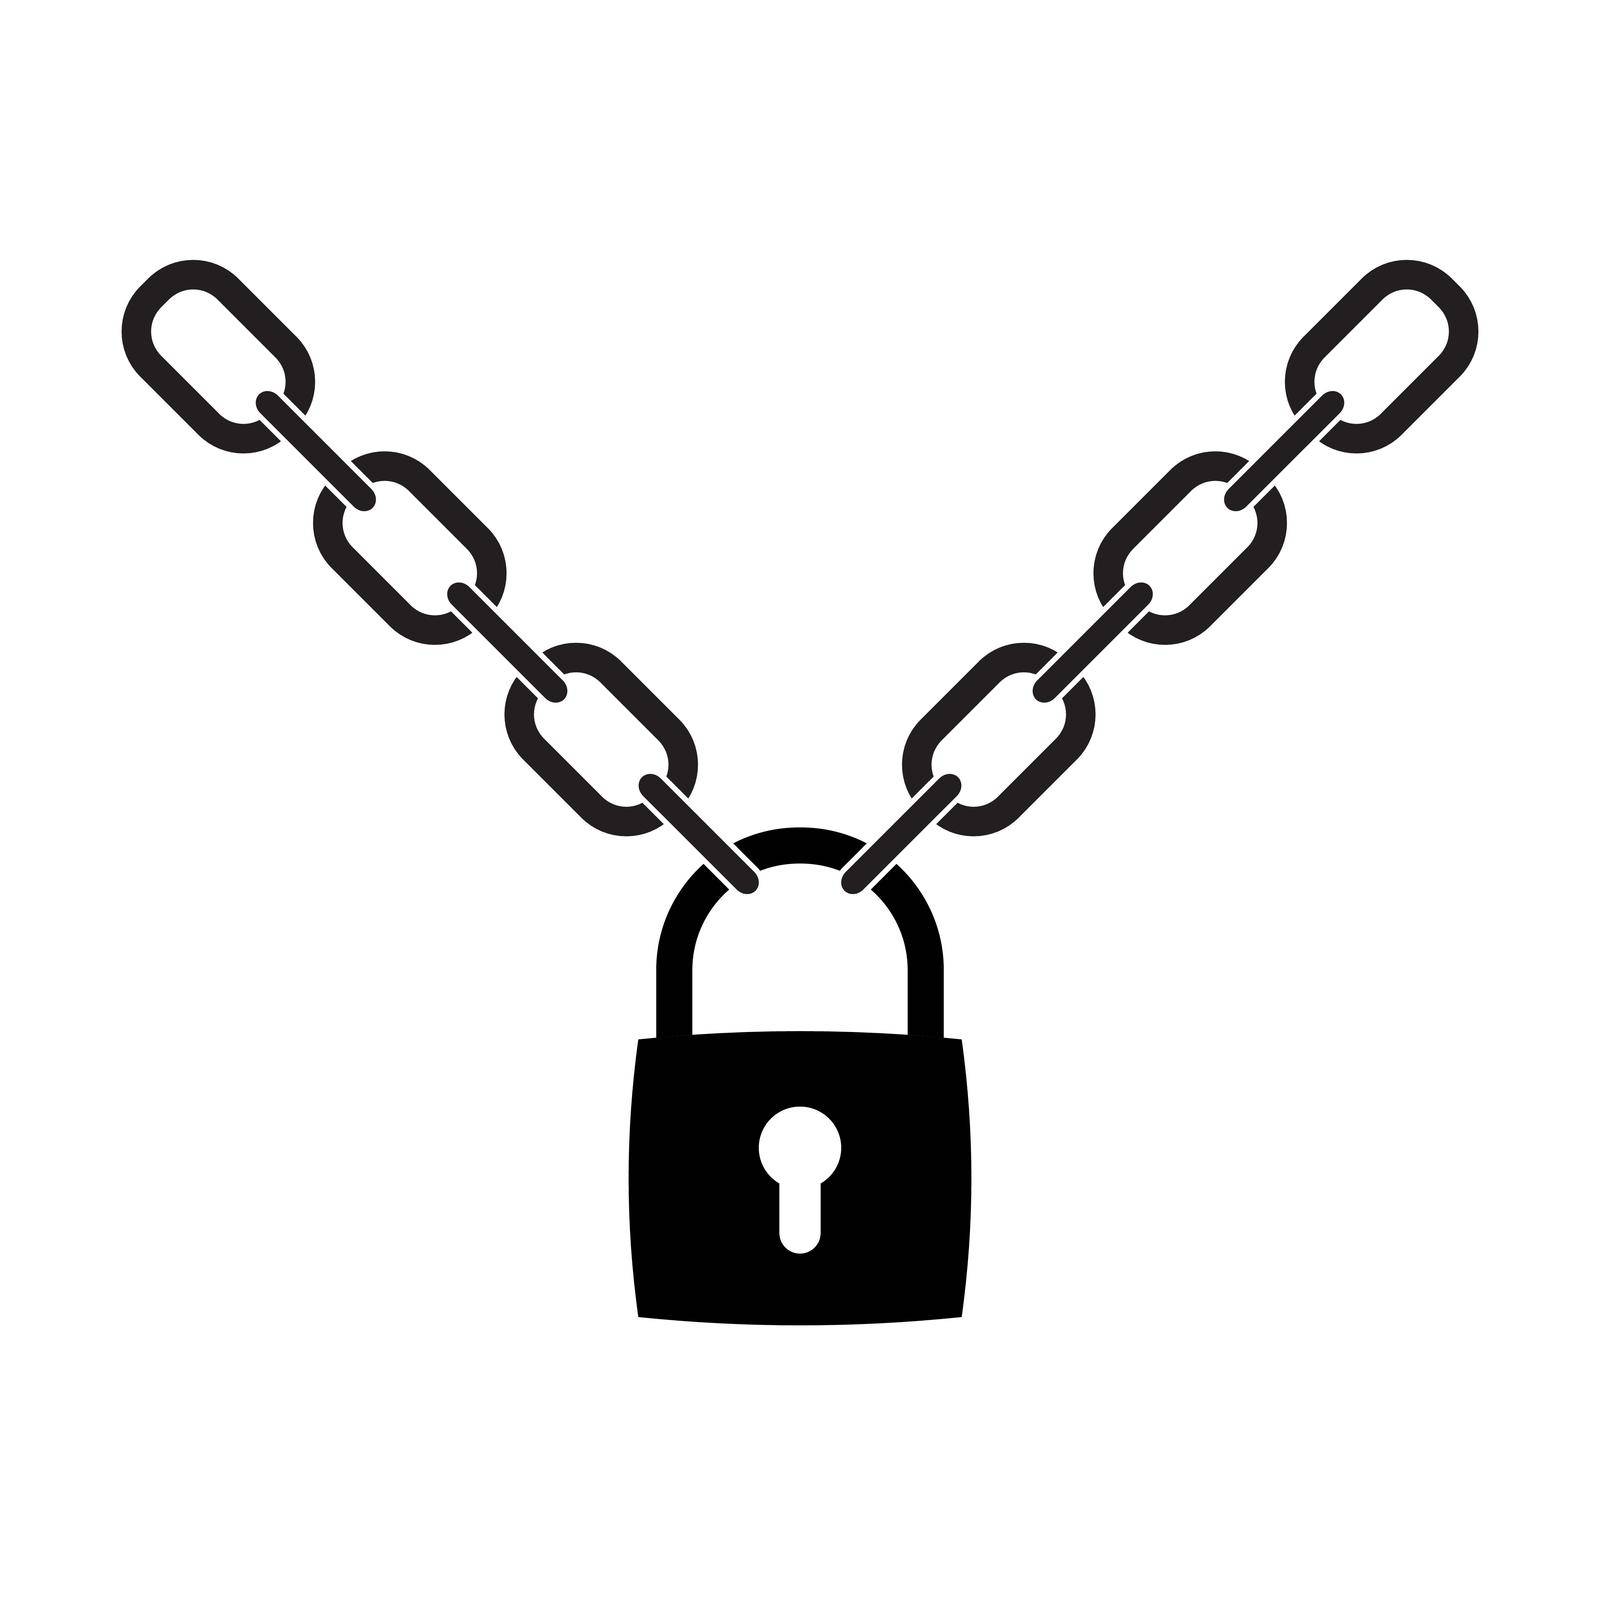 illustration of chain and padlock silhouette by wektorygrafika